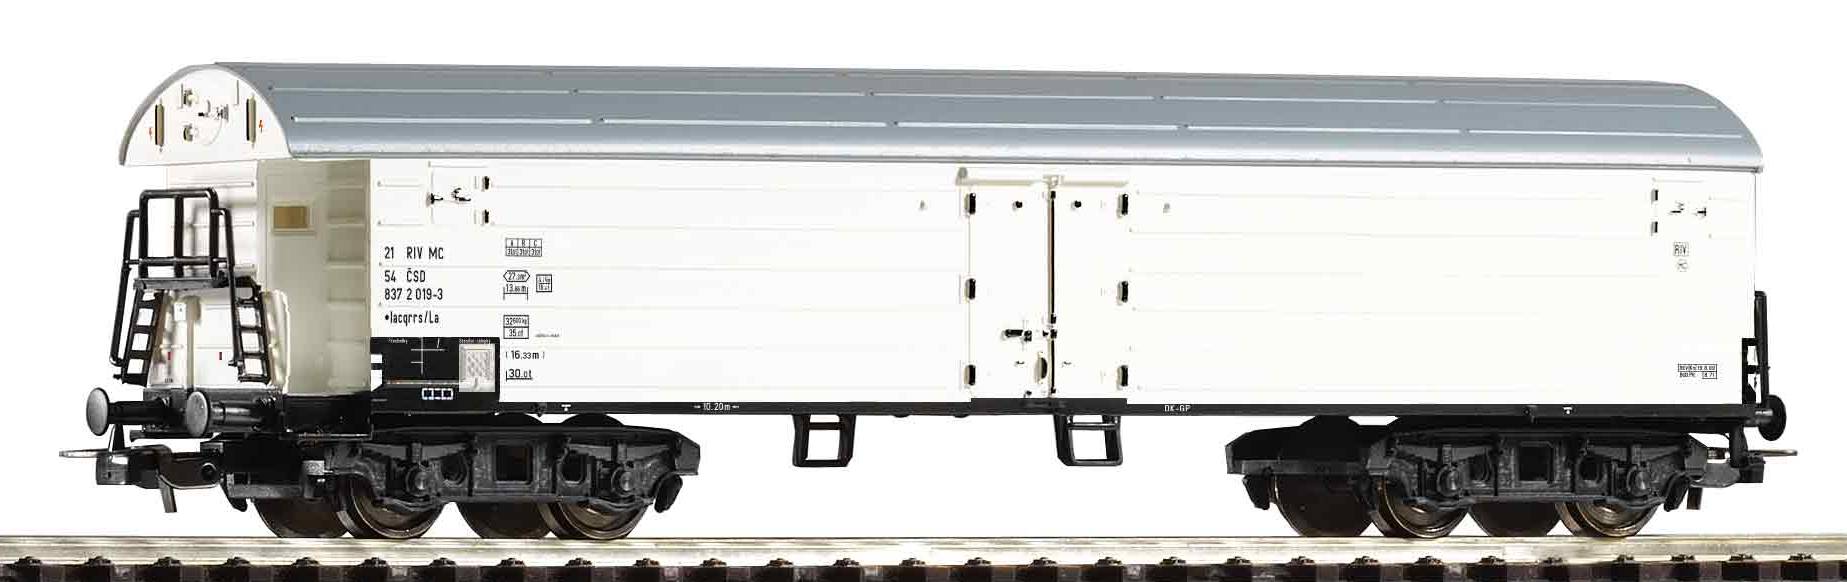 4 achsiger Kühlwagen CSD III - 24520